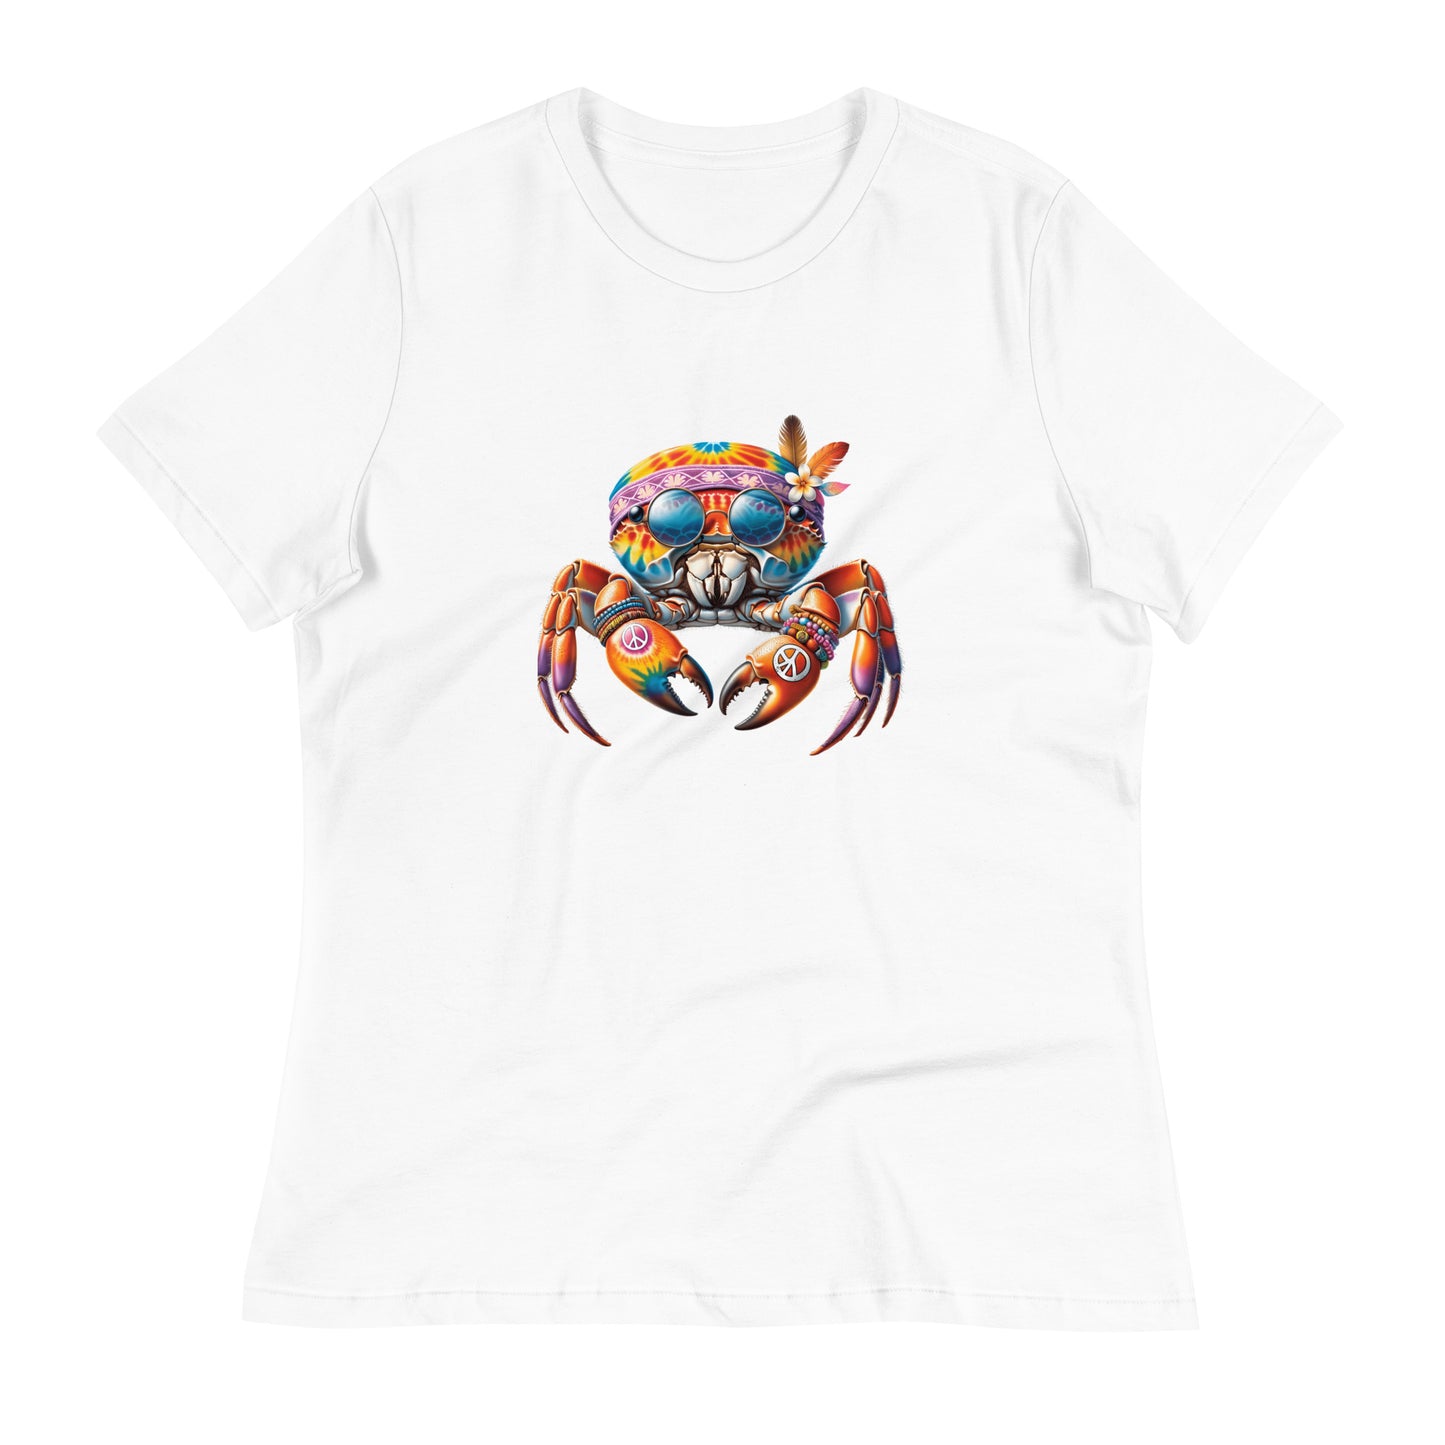 Cool Hippie Crab Women's T-Shirt